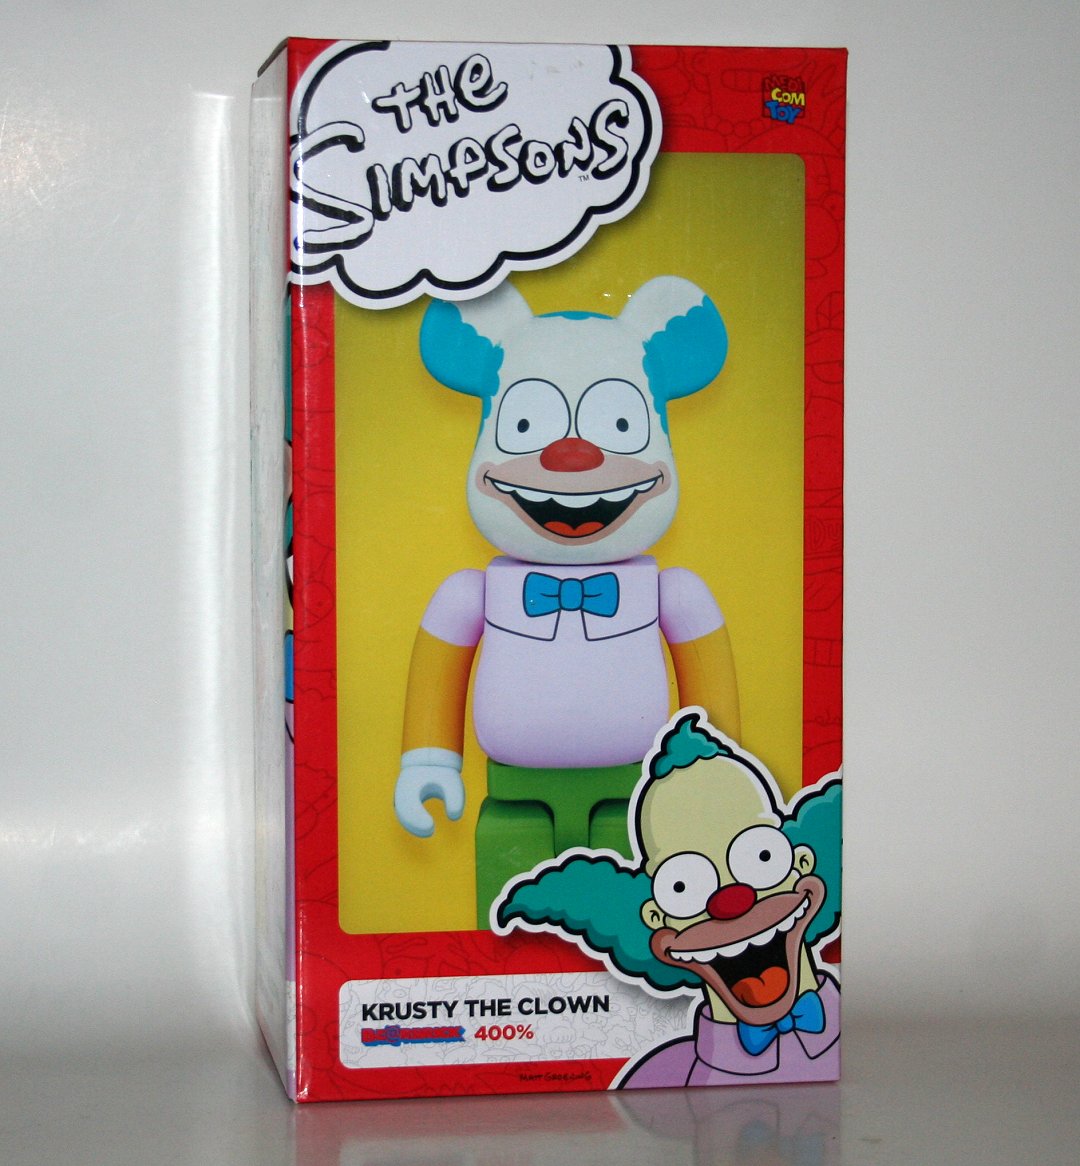 Medicom x The Simpsons 400% Krusty the Clown Be@rbrick